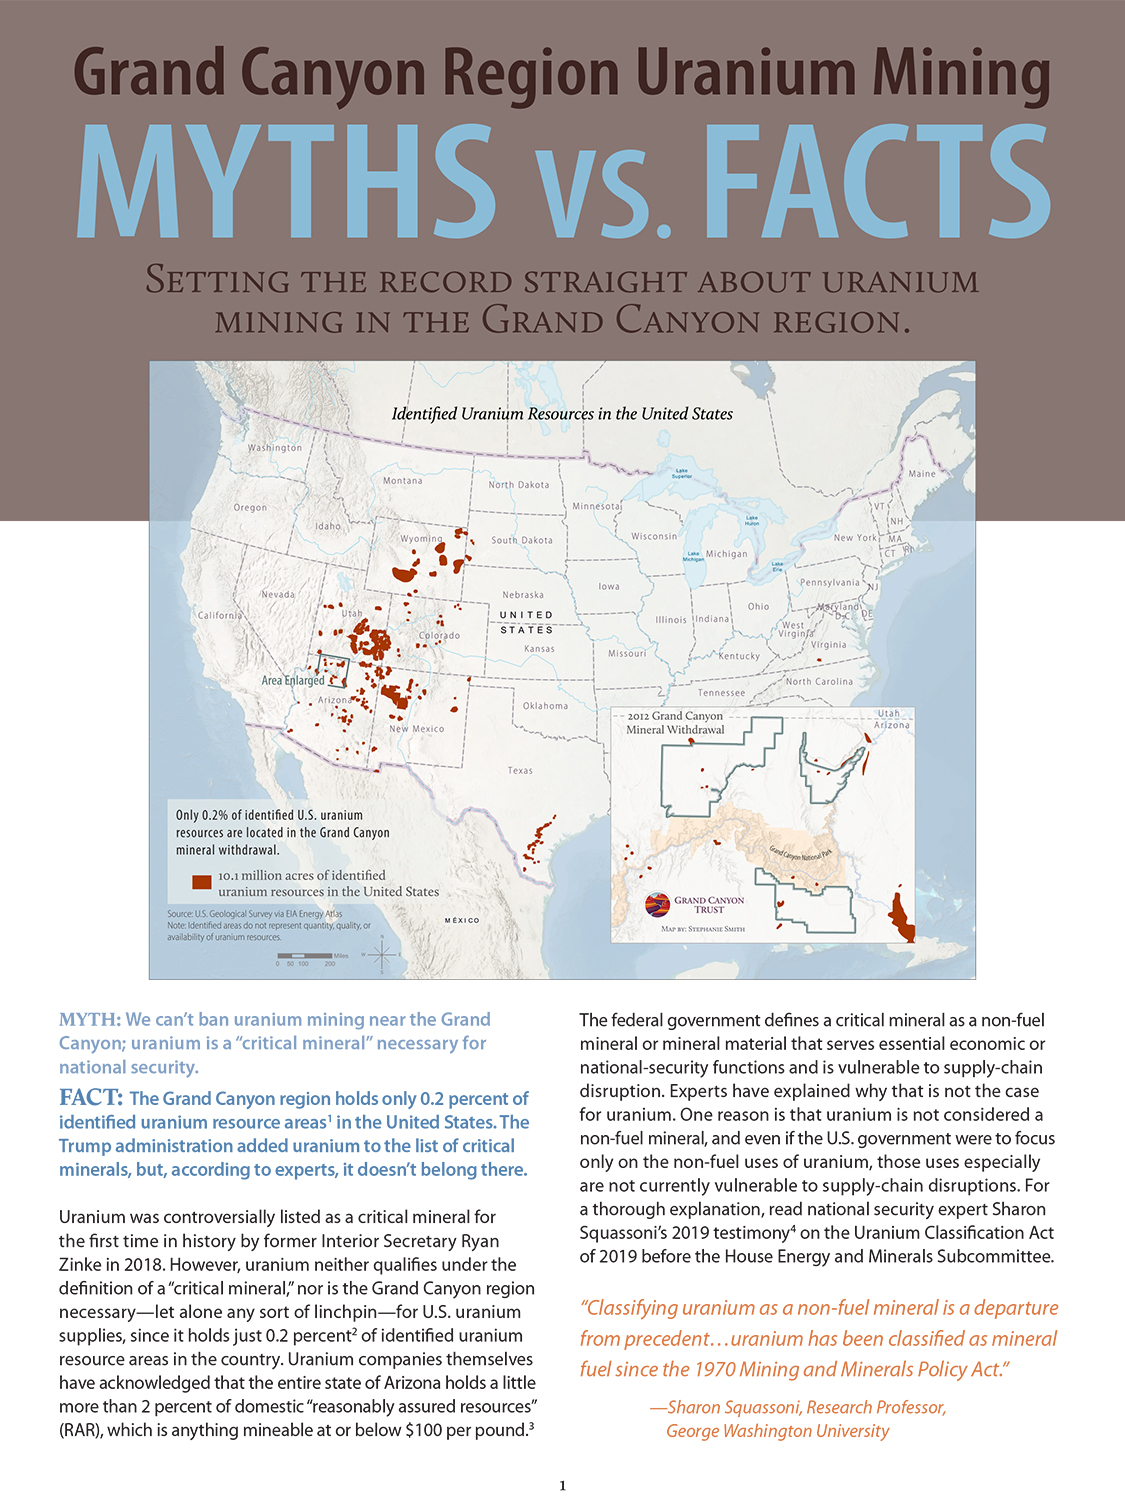 Grand Canyon uranium myths vs facts